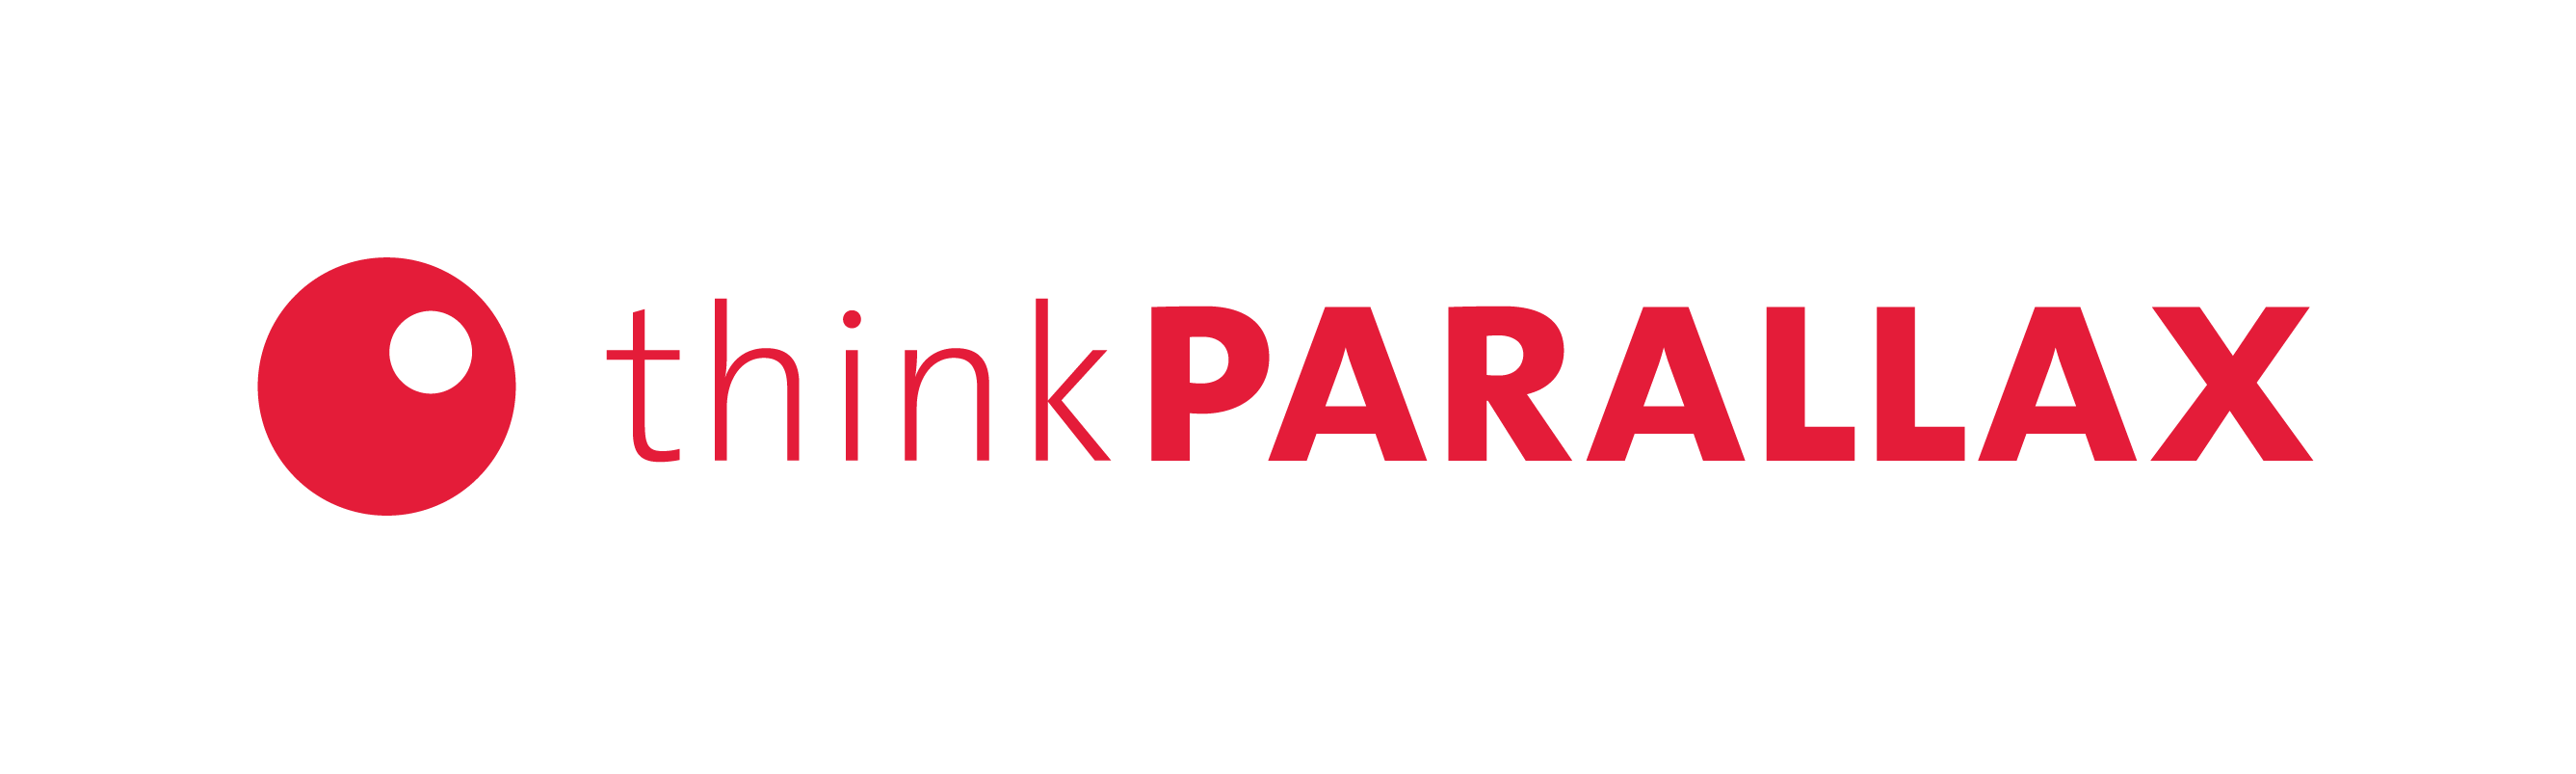 thinkPARALLAX_Logo_Red